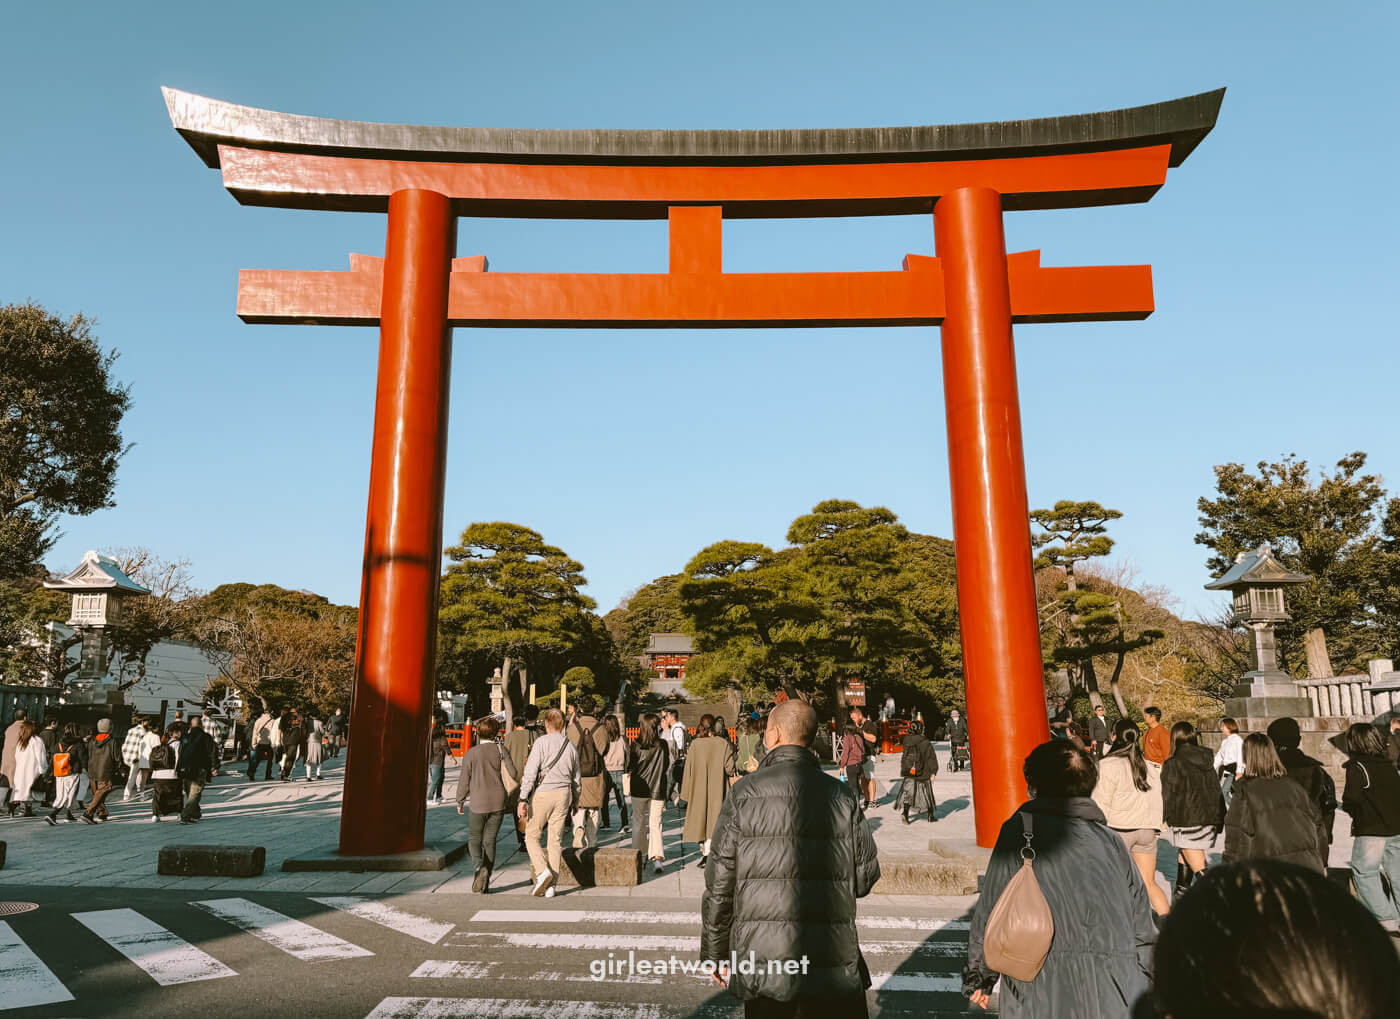 The big torii gate at the entrance of Tsurugaoka Hachimangu